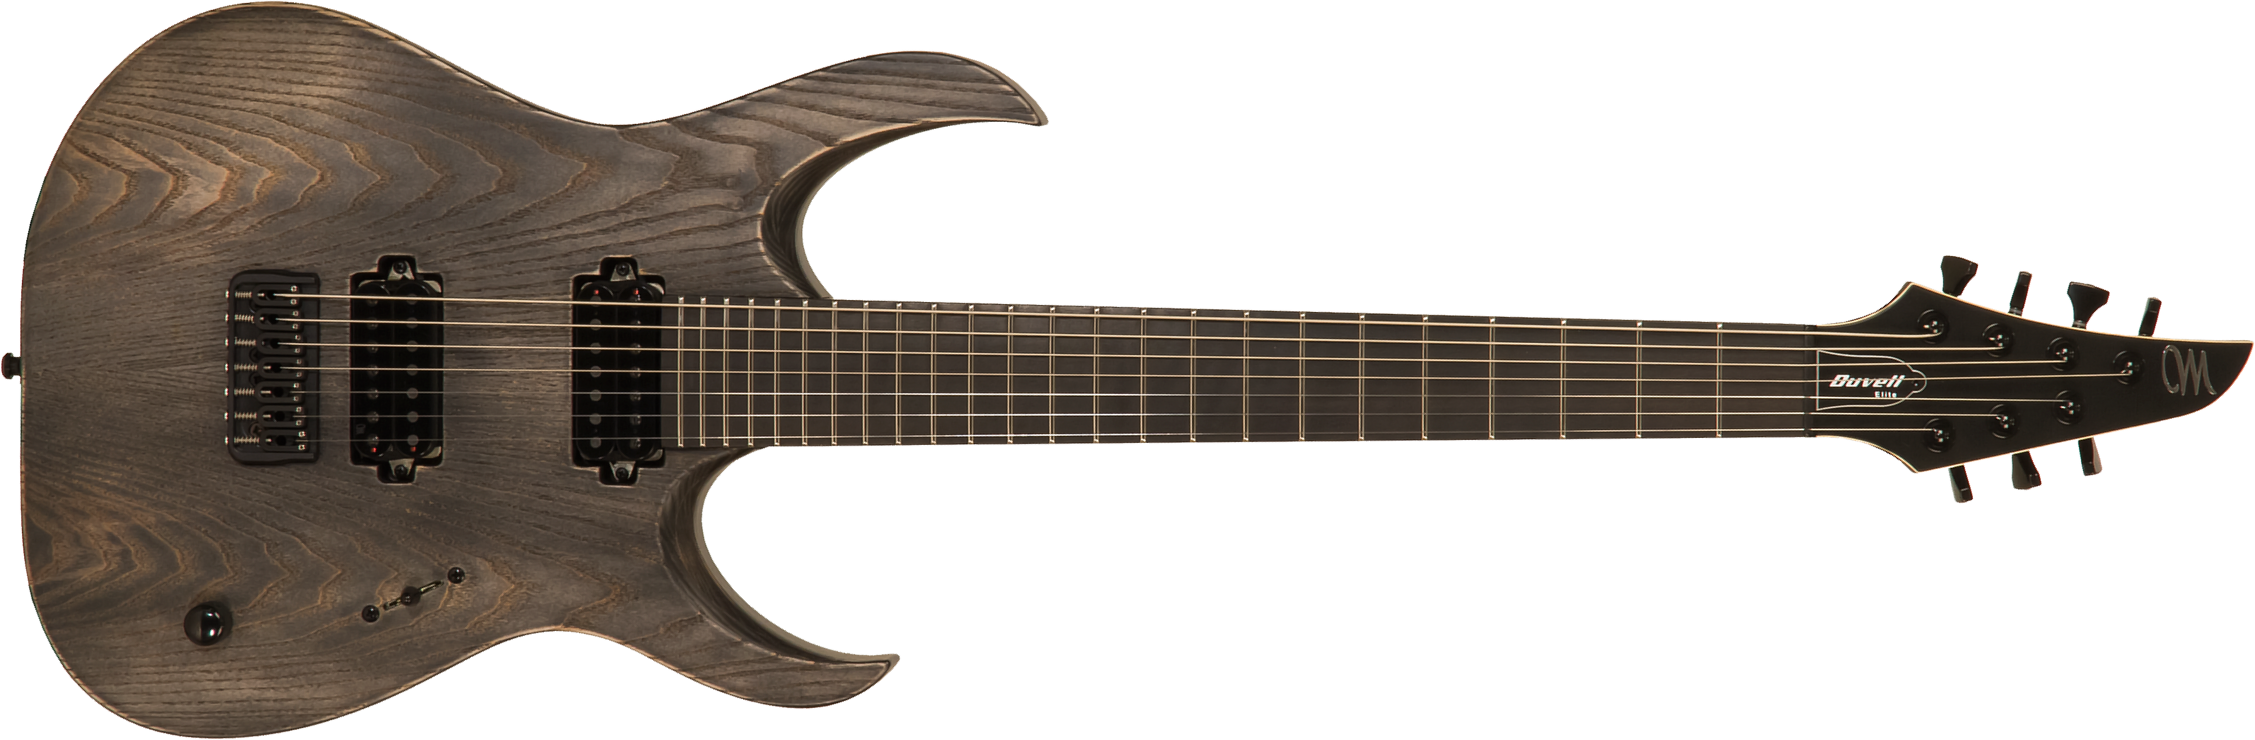 Mayones Guitars Duvell Elite Gothic 7 40th Anniversary 2h Tko Eb #df2205923 - Antique Black Satin - Guitare Électrique 7 Cordes - Main picture